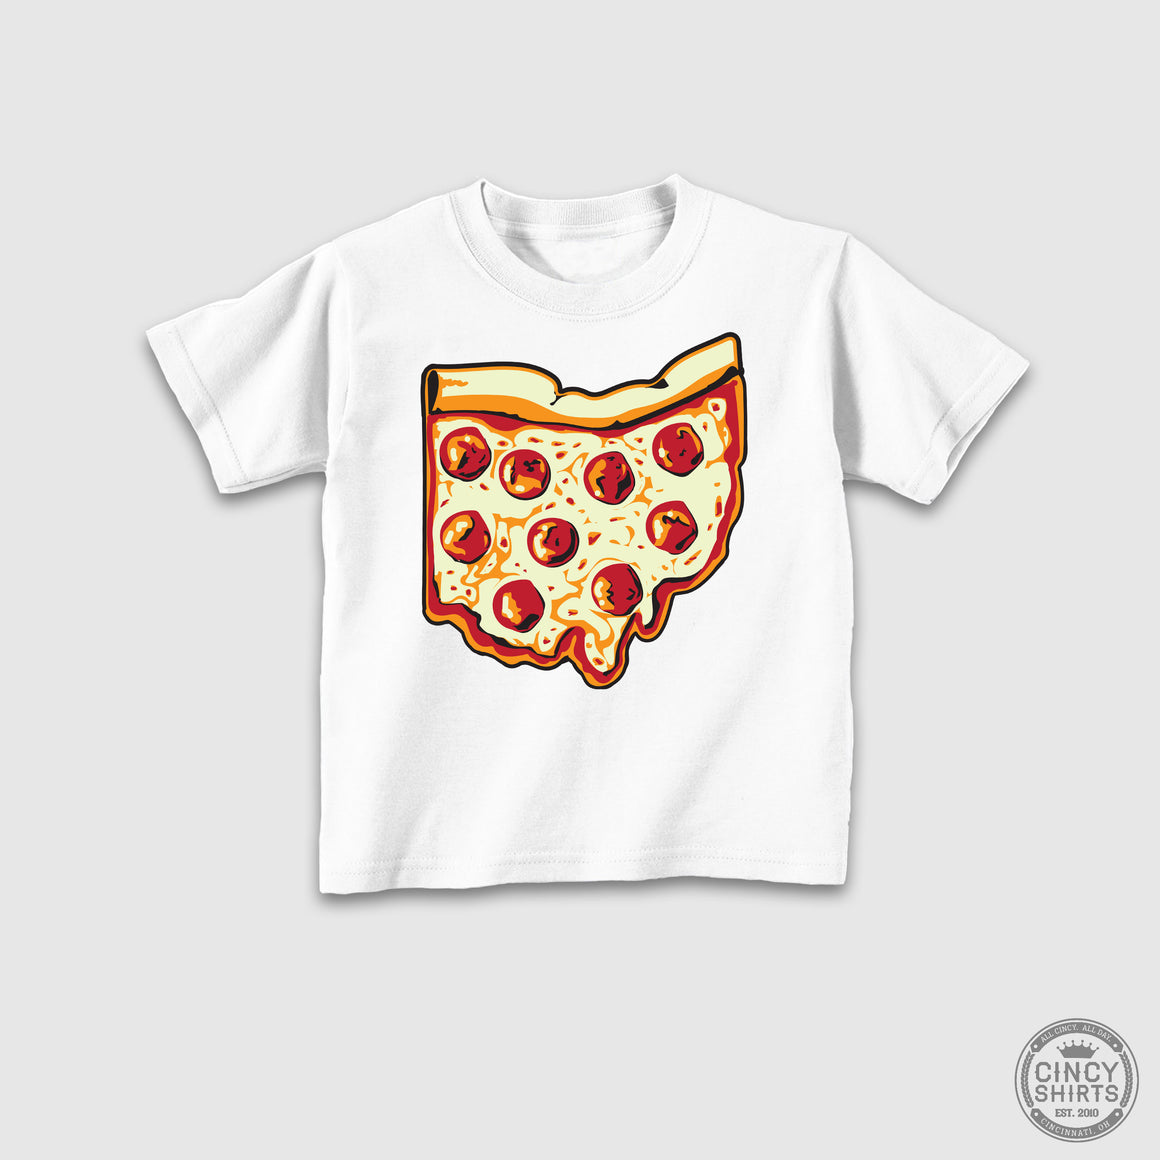 Pizza Ohio - Youth Sizes - Cincy Shirts